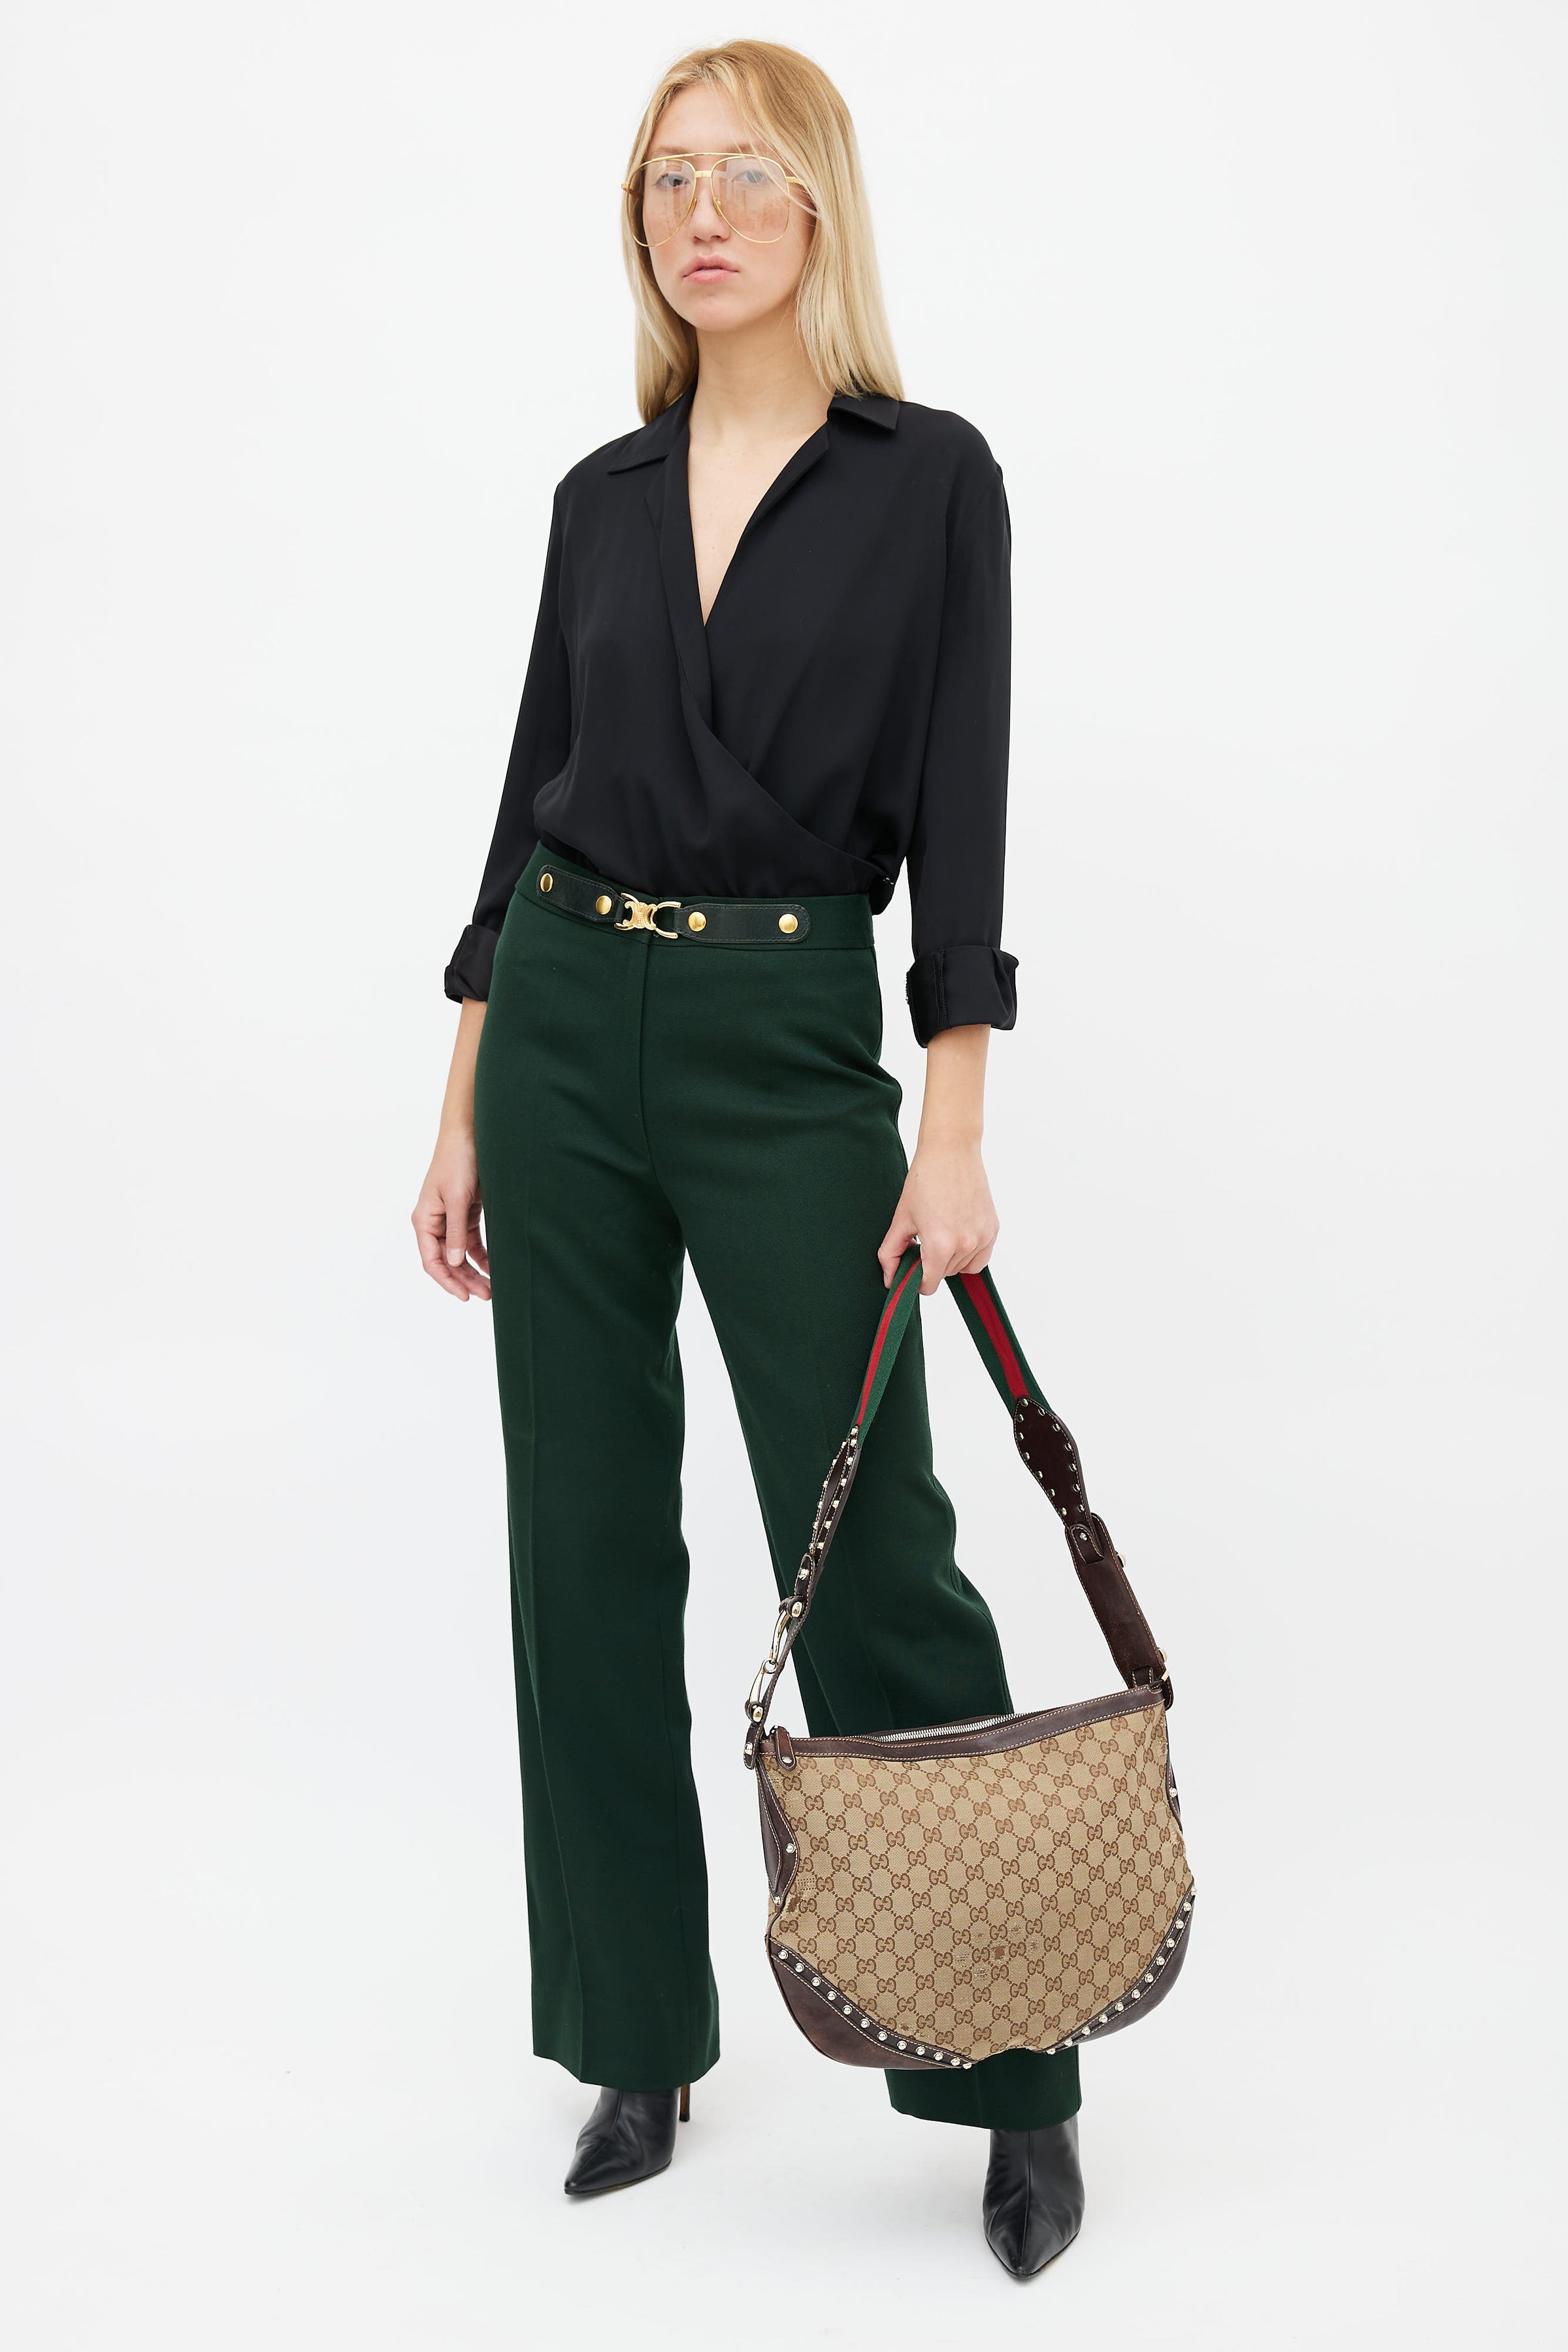 Buy Brand New & Pre-Owned Gucci GG Canvas Binoche Medium Shoulder Bag  Online